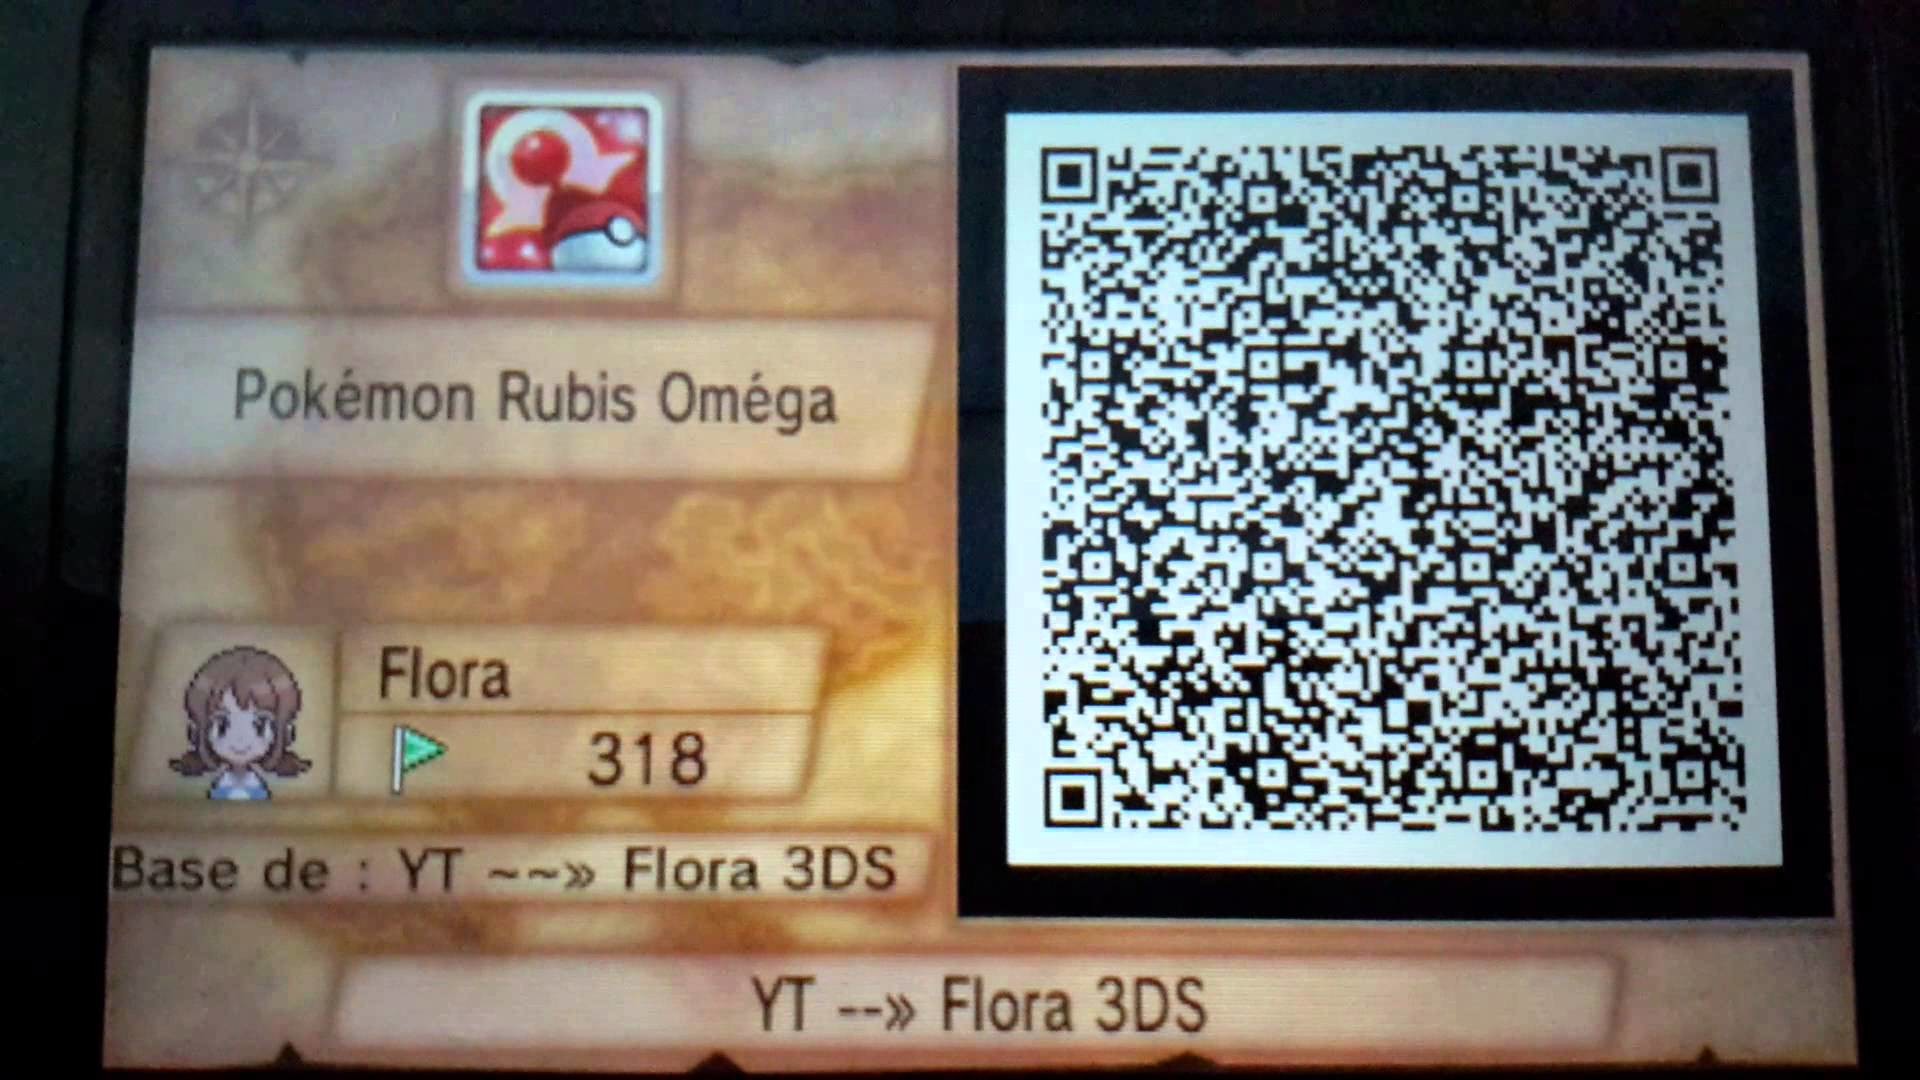 1920x1080 [Pokemon Rubis Omega]: QR Code de ma base. - YouTube